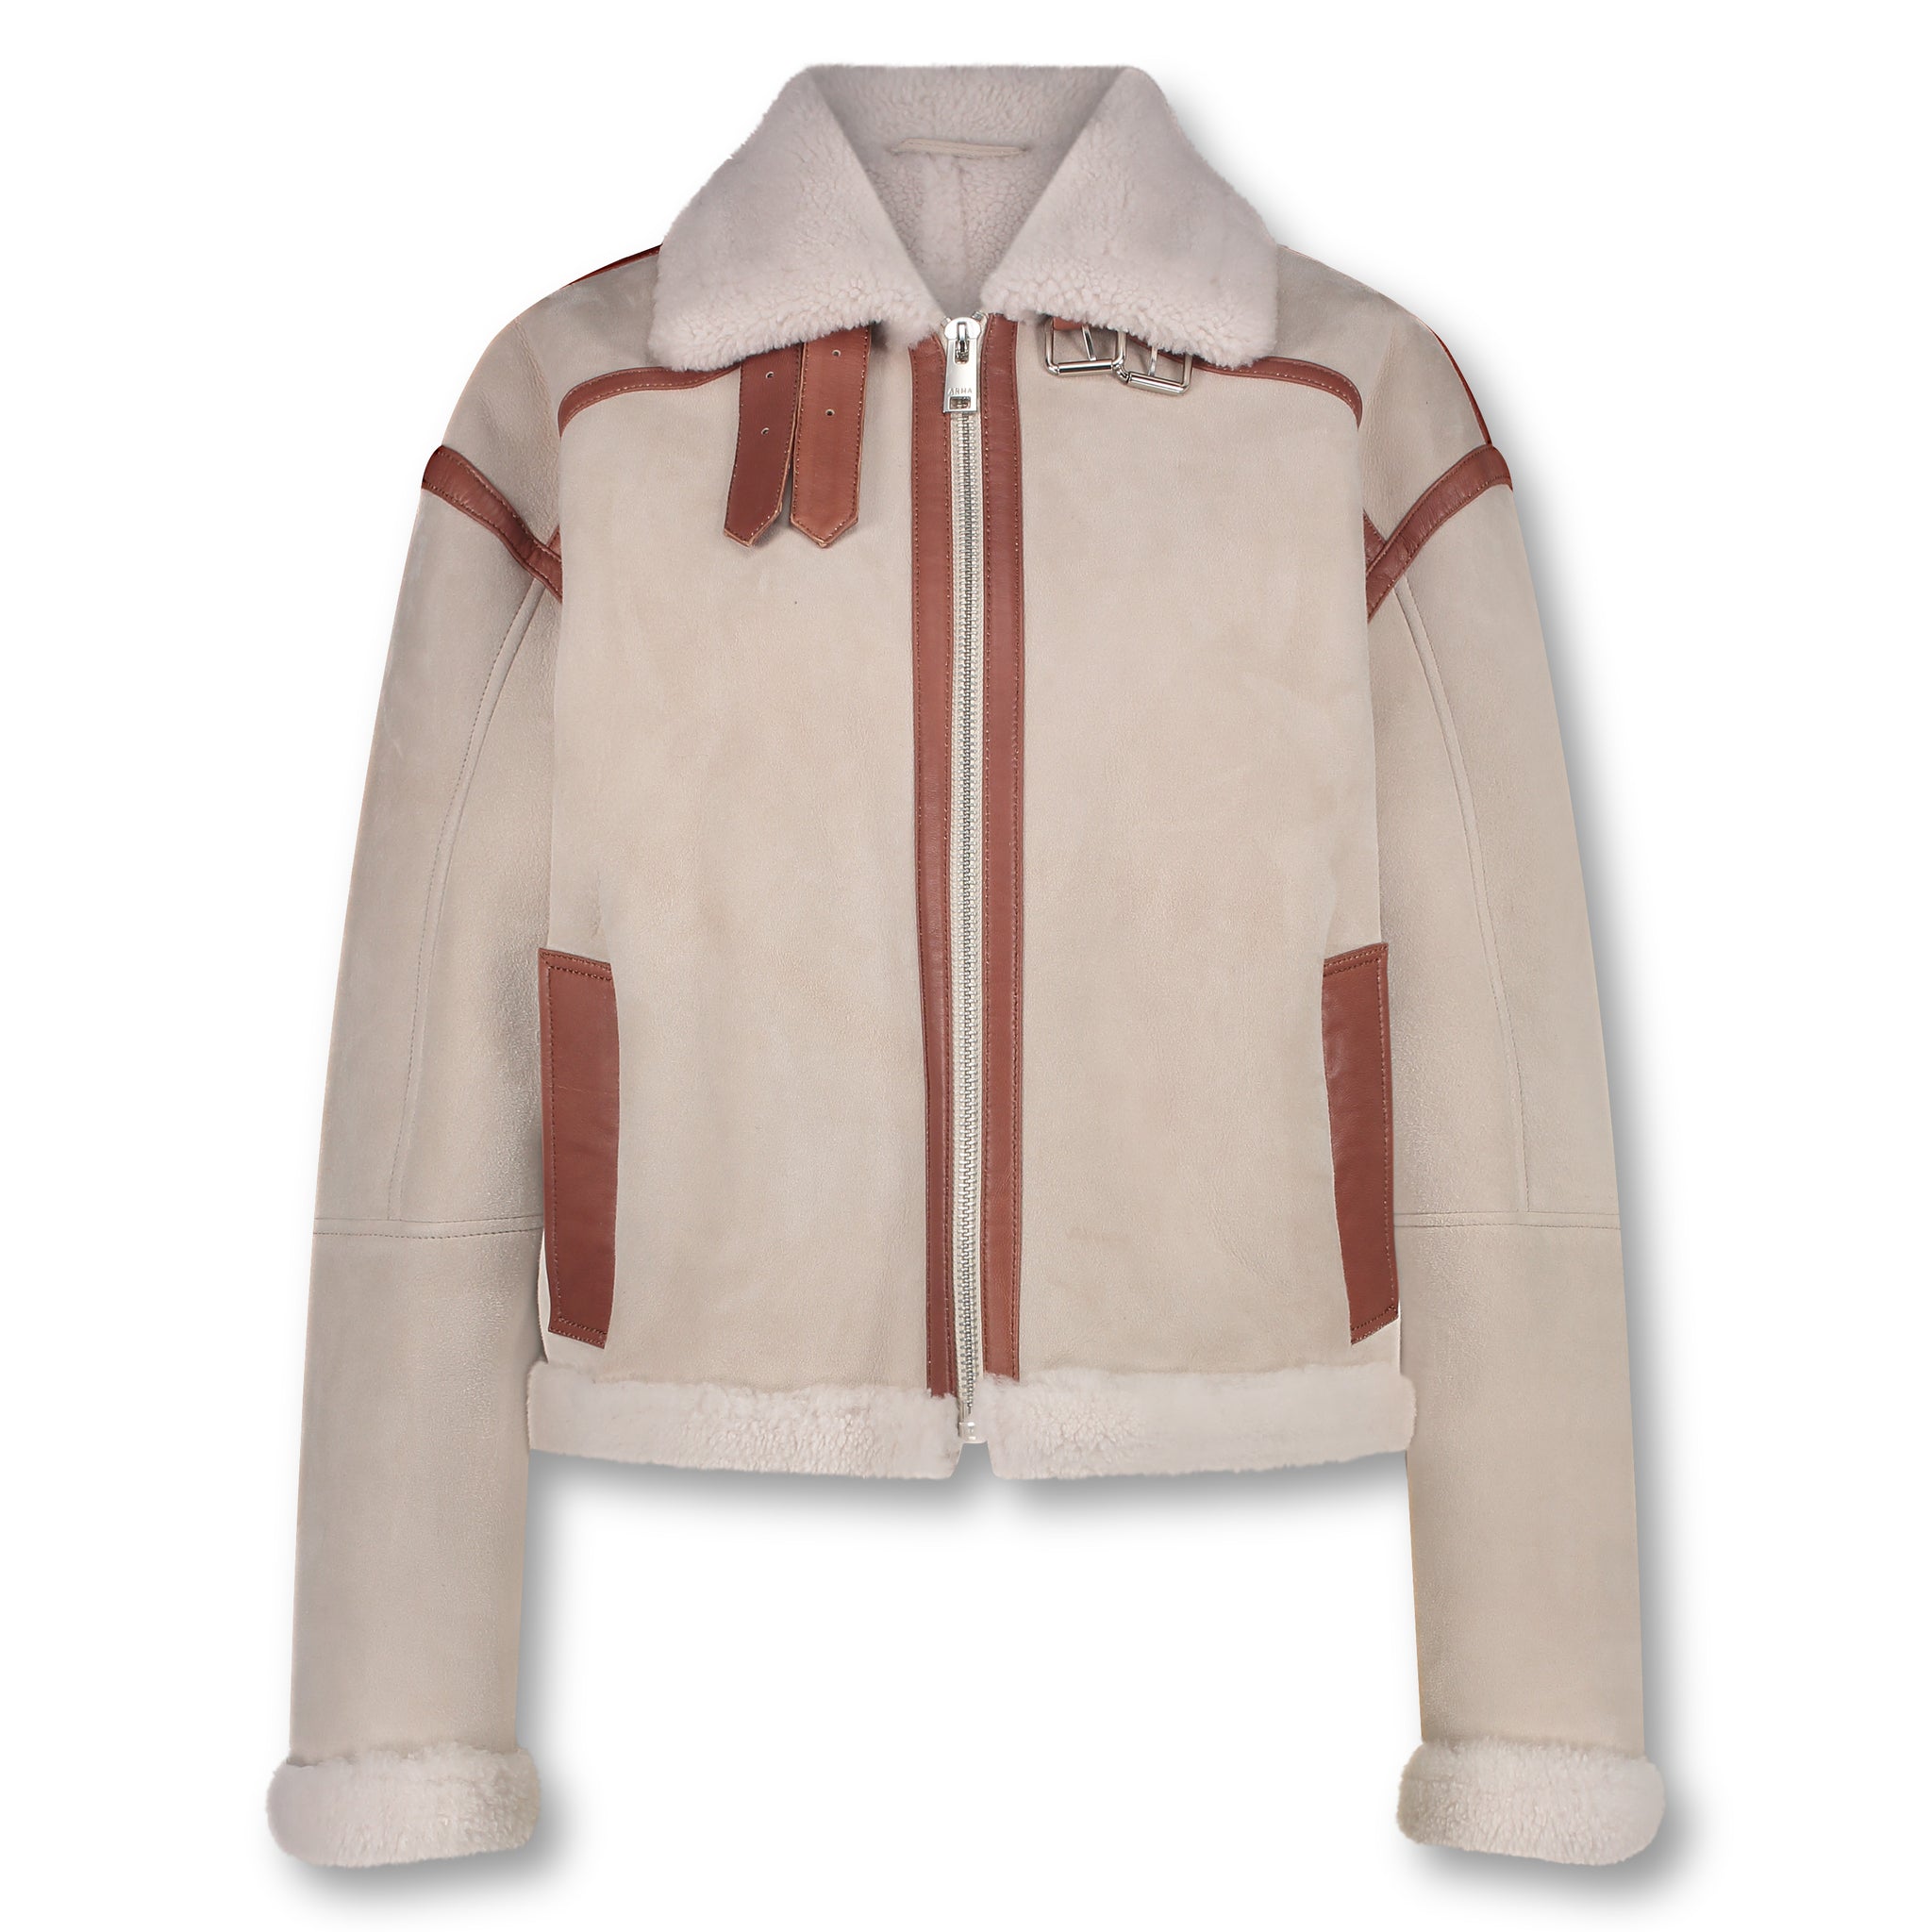 BILBAO | Boxy shearling jacket